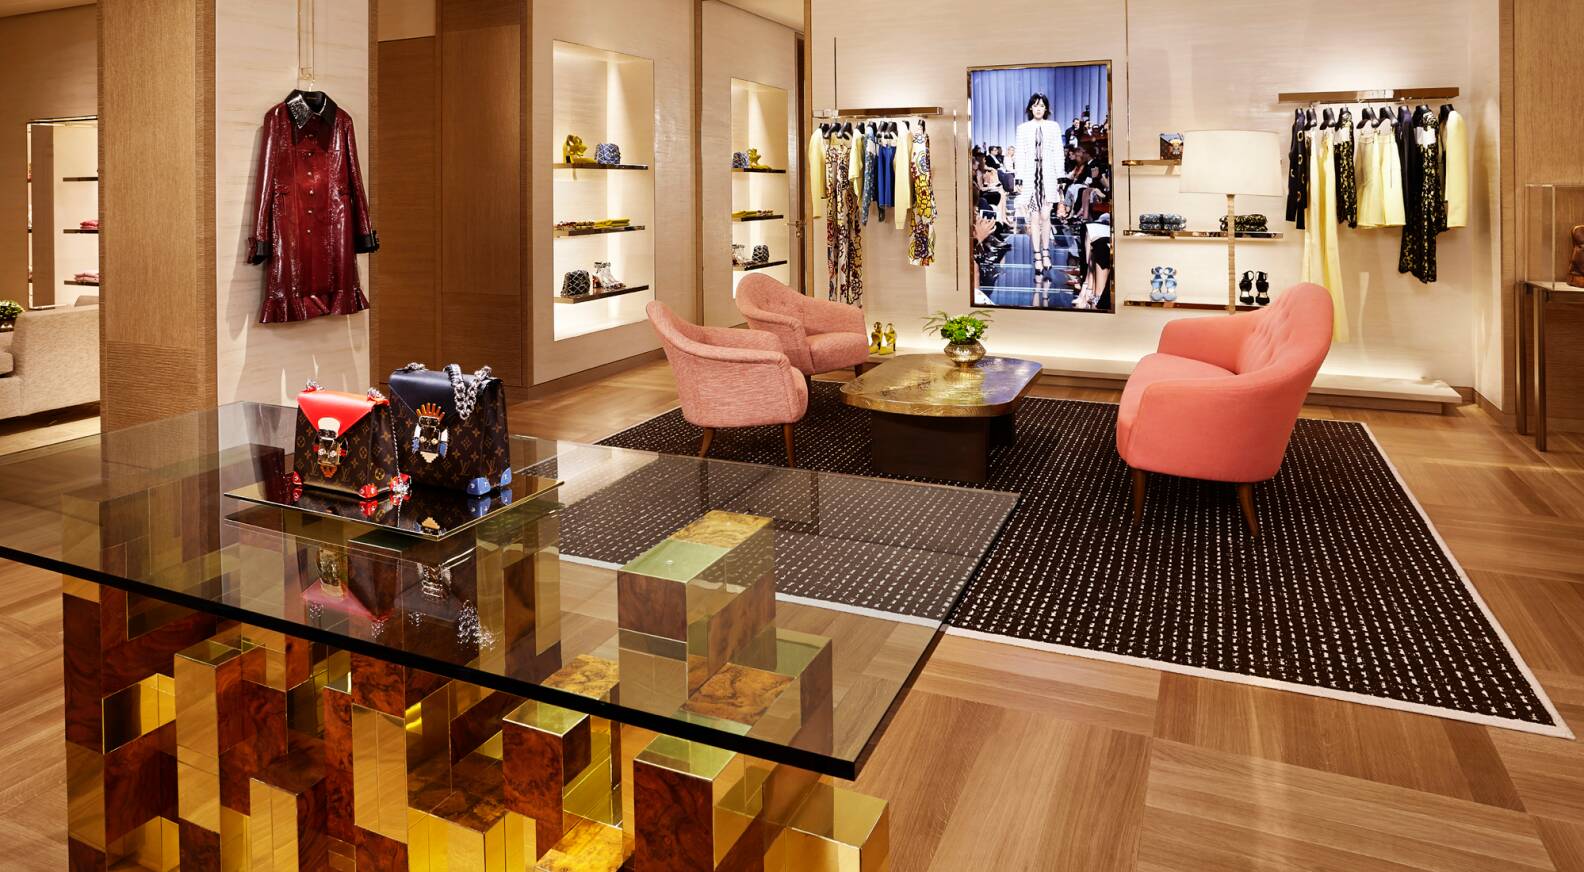 Celine fashion luxury store in avenue Montaigne in Paris, France